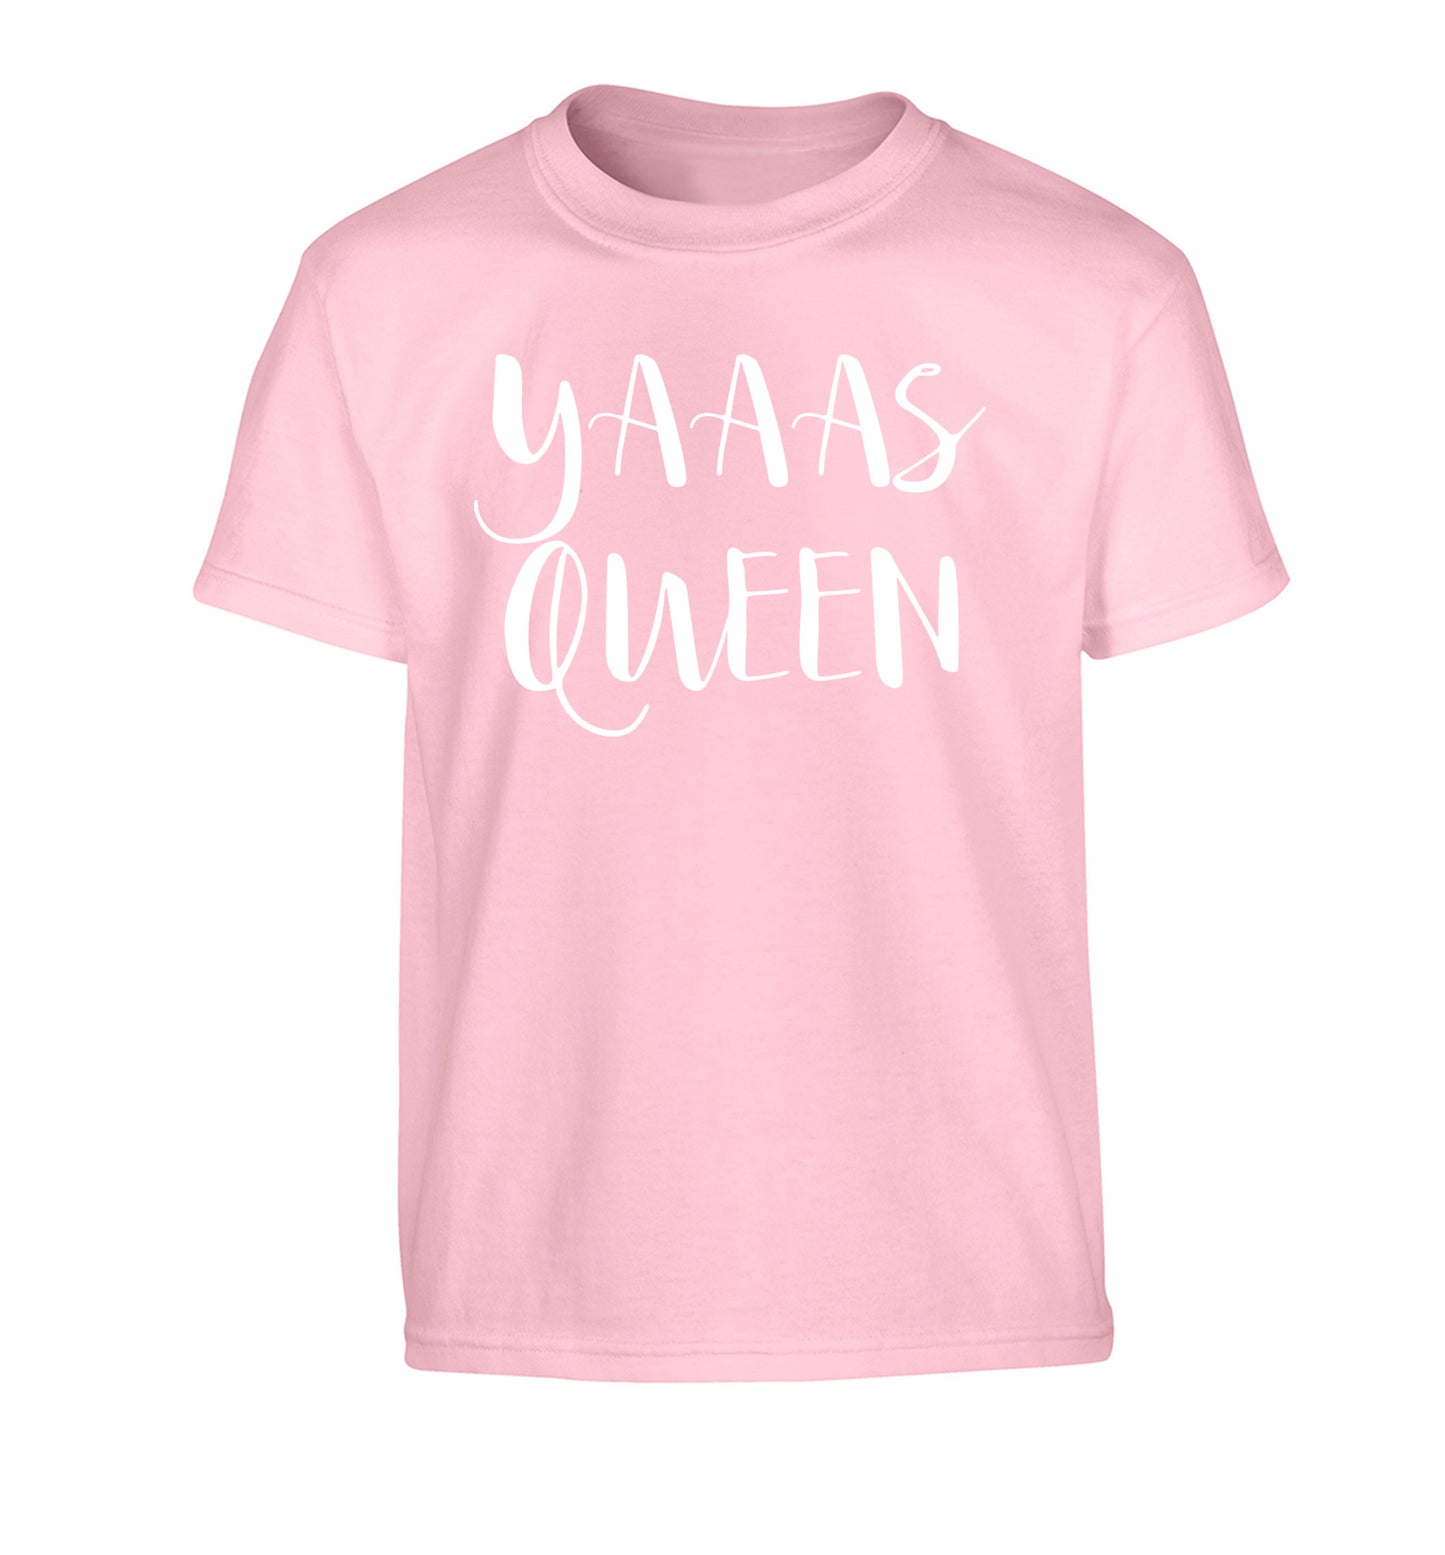 Yas Queen Children's light pink Tshirt 12-14 Years